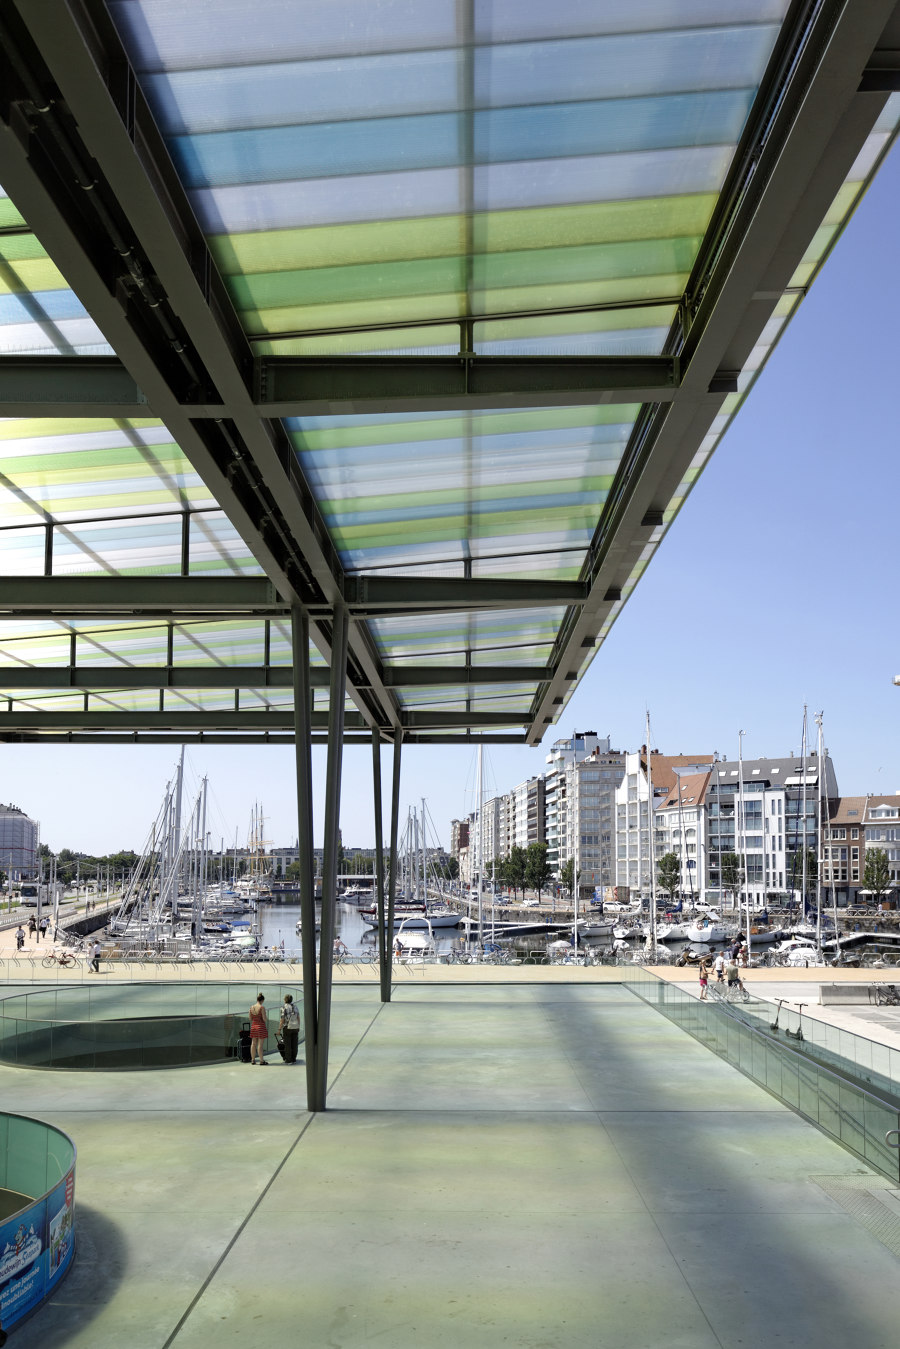 Oostende Station di Dietmar Feichtinger Architectes | Costruzioni infrastrutturali